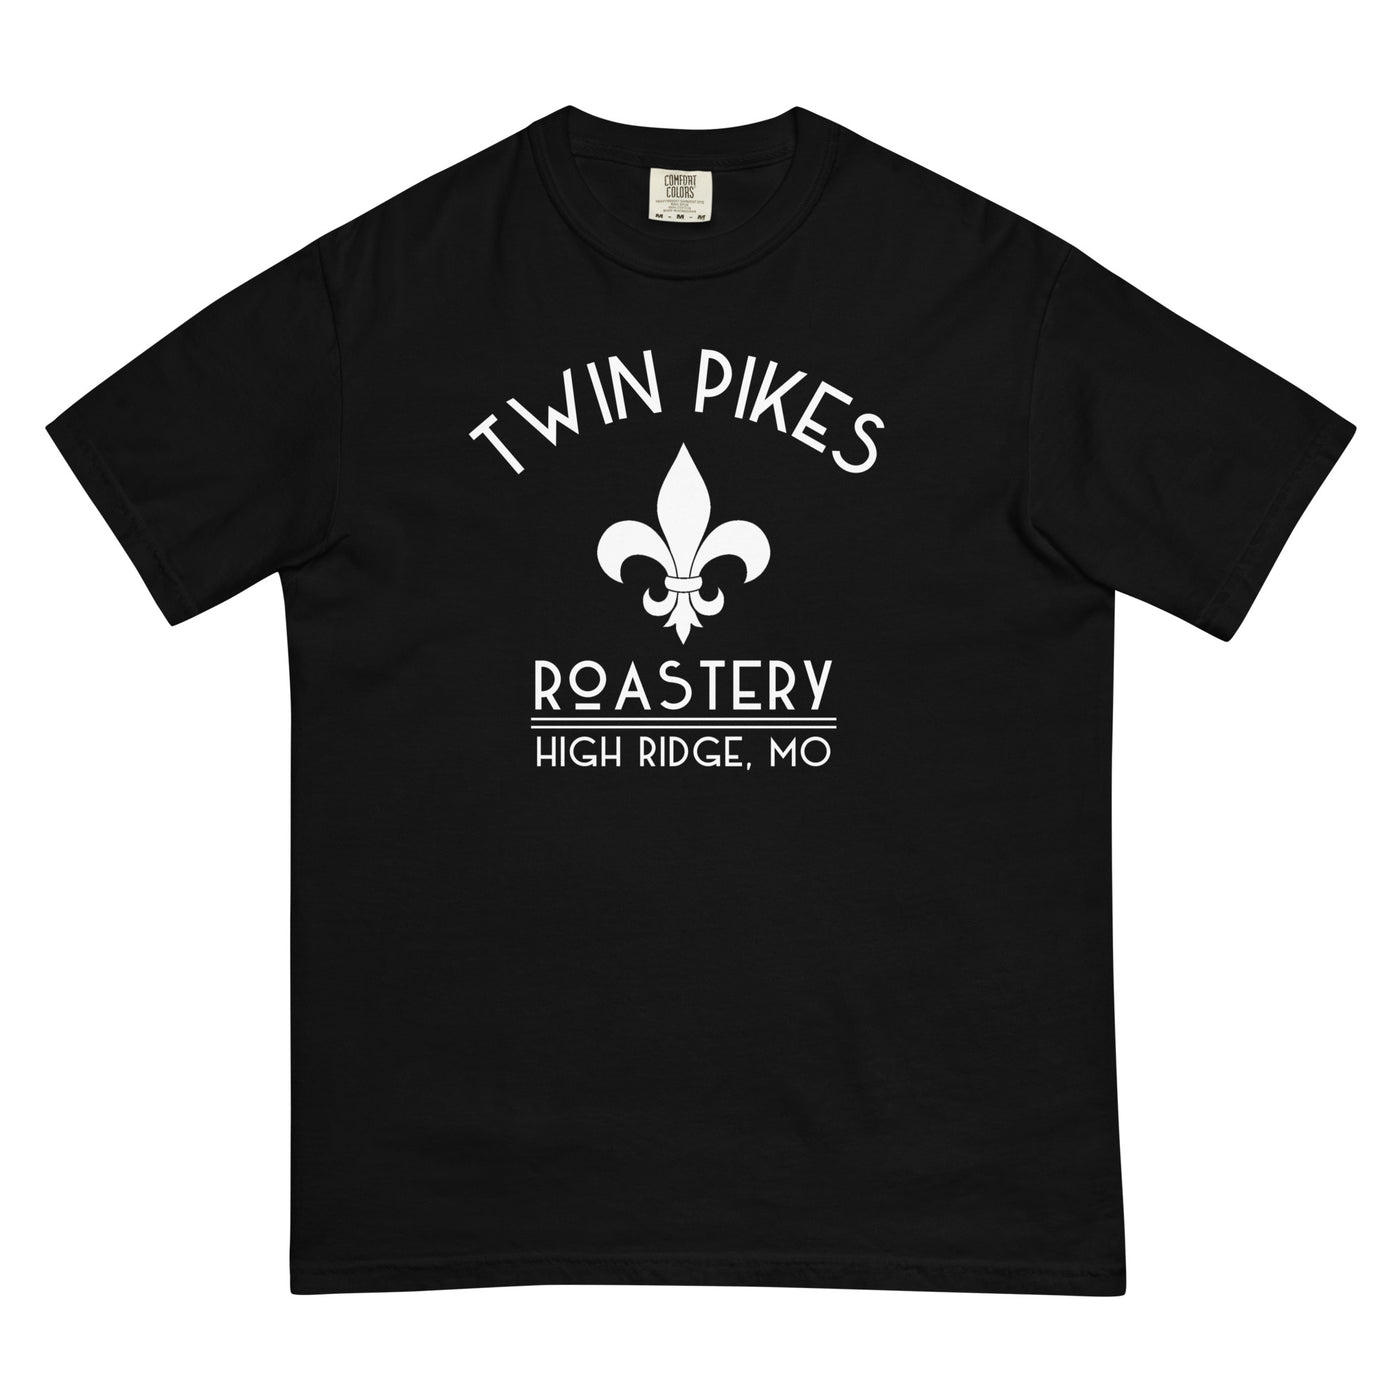 Garment-dyed heavyweight t-shirt High Ridge -  Twin Pikes Roastery